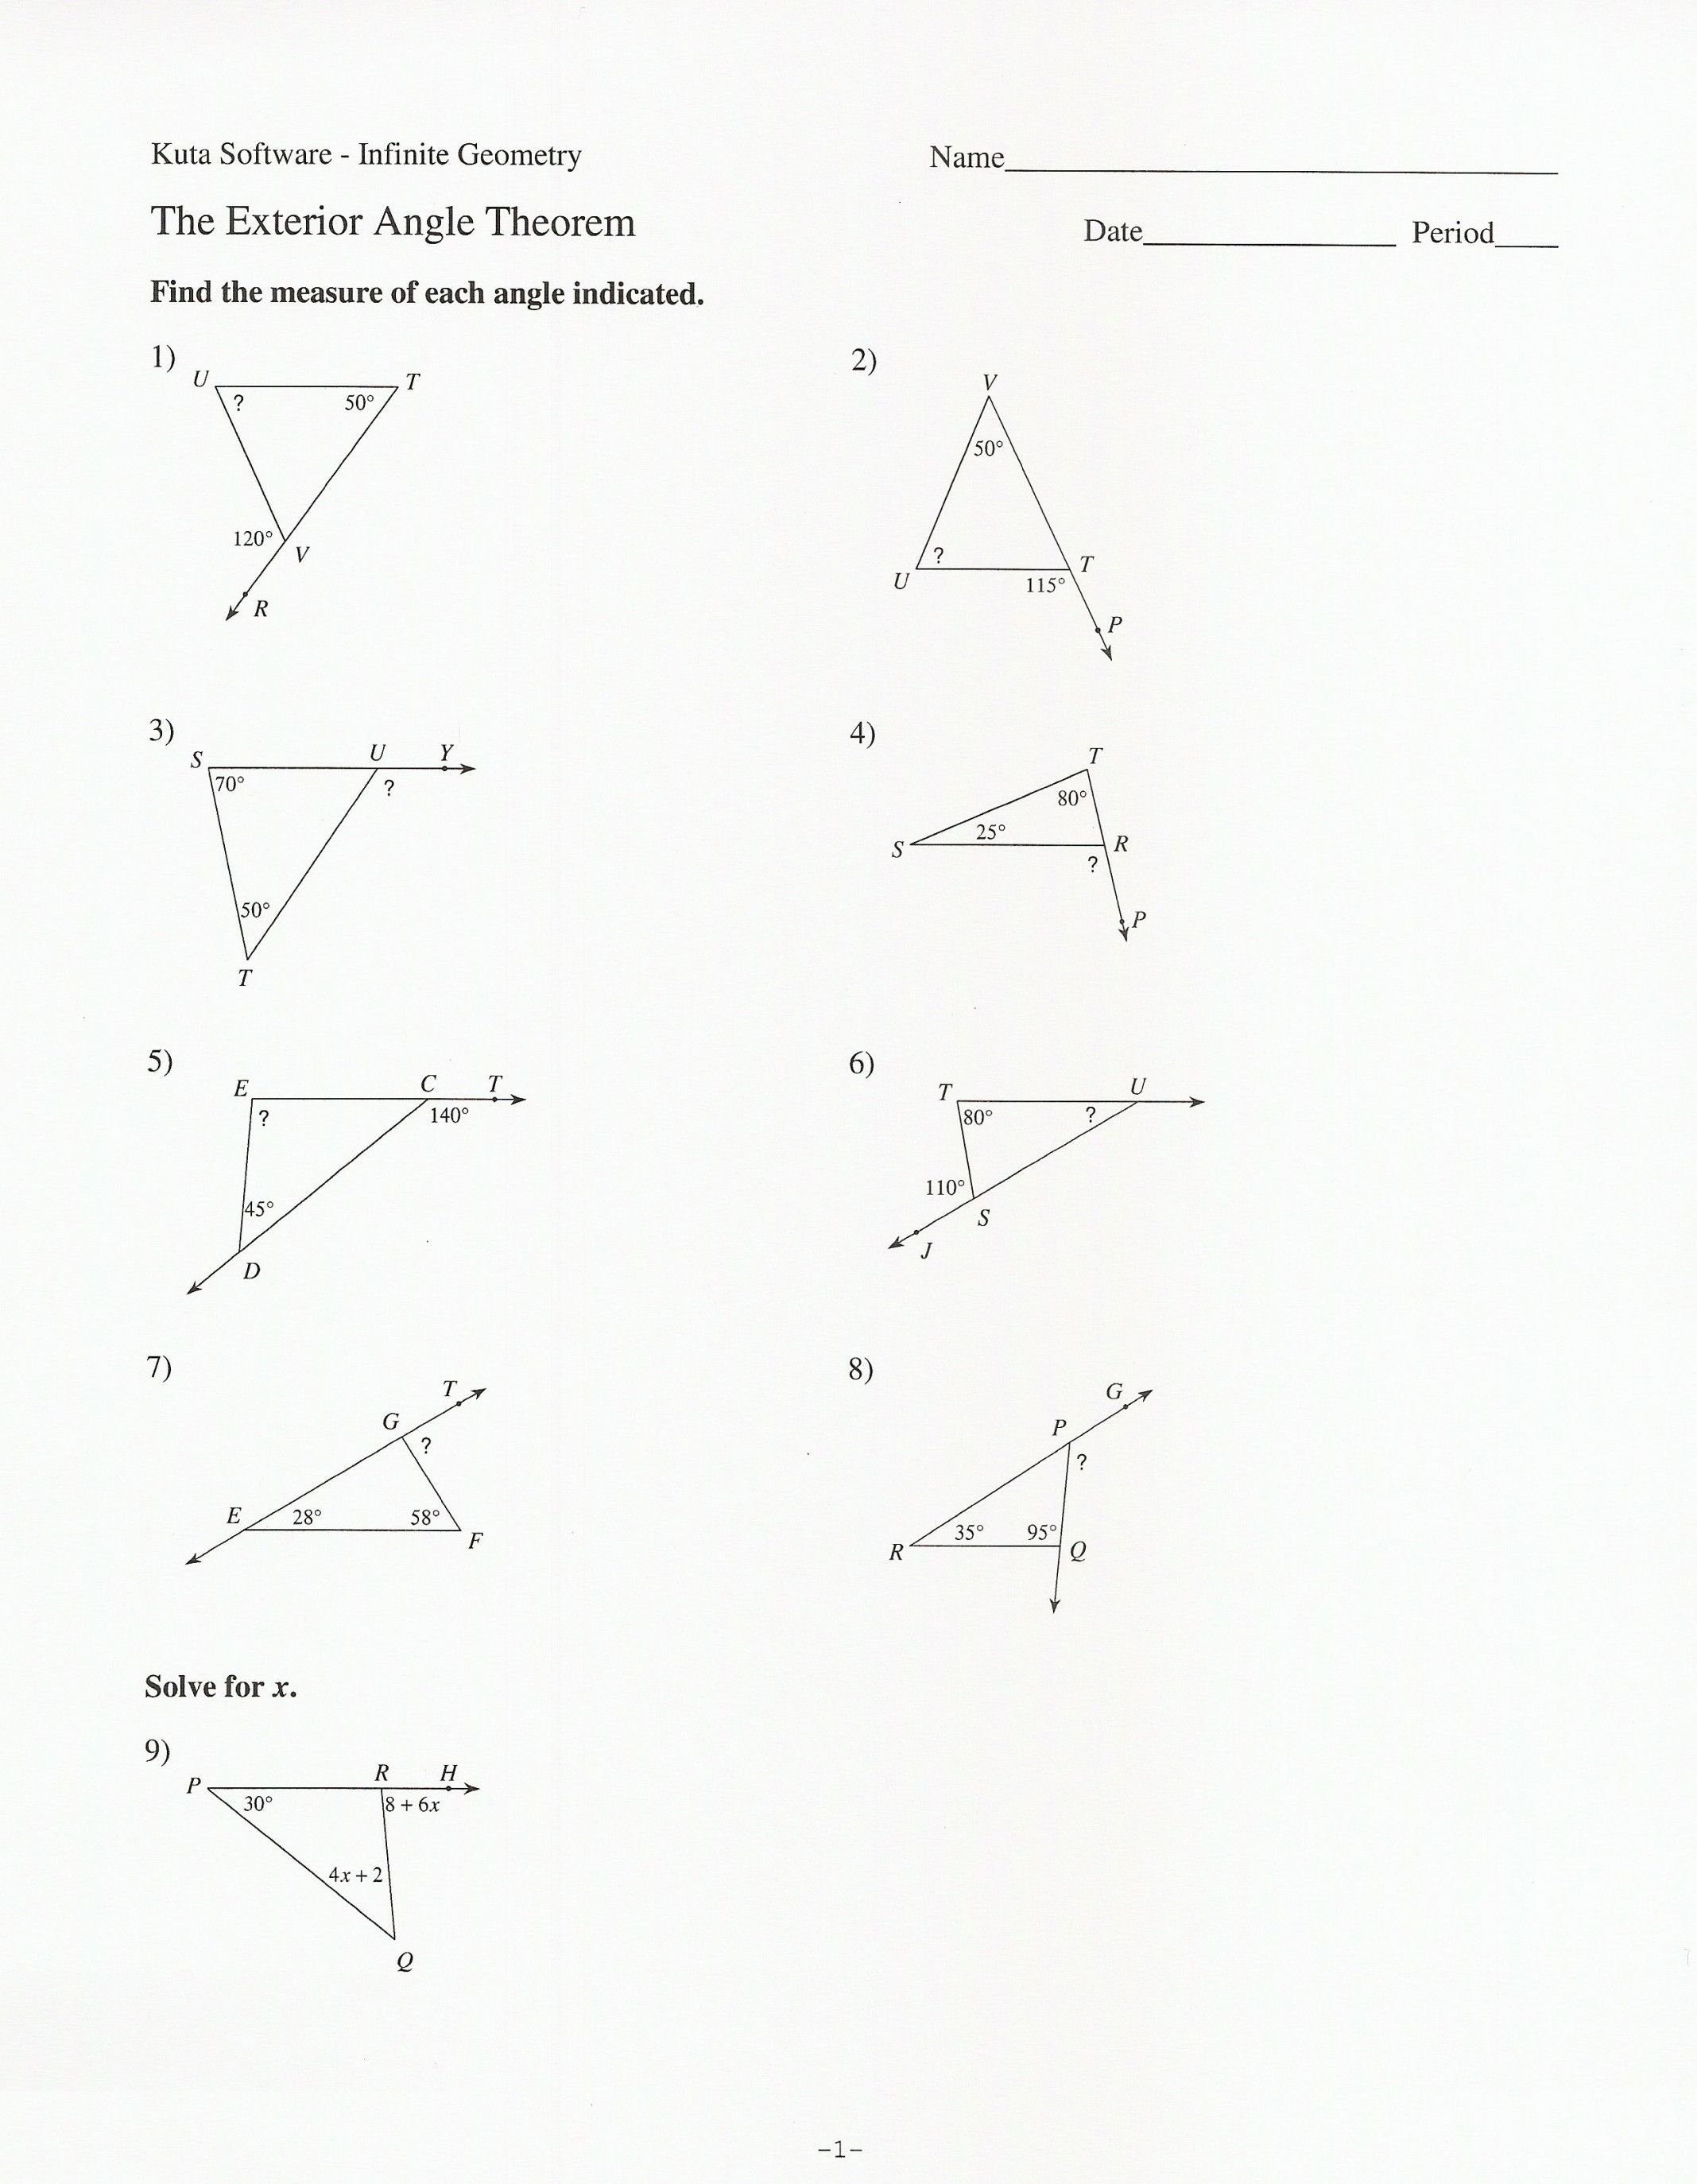 Triangle Angle Sum Theorem C Triangle Sum And Exterior Angle Theorem In Exterior Angle Theorem Worksheet